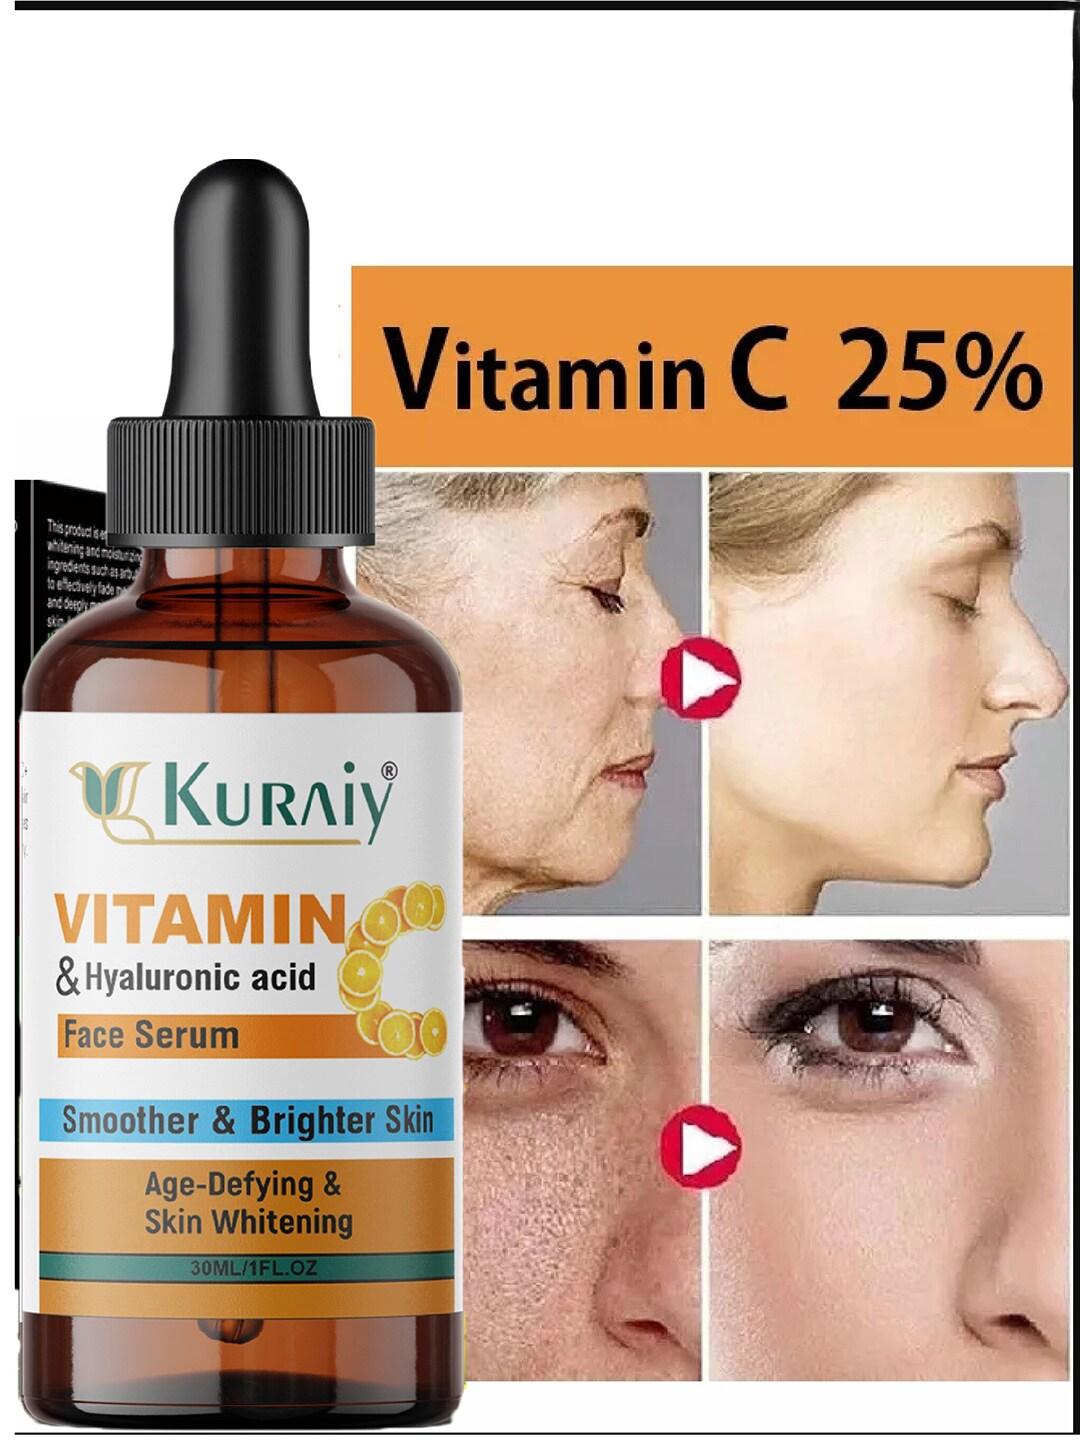 KURAIY Vitamin C Triple Action Formula Face Serum - 30 ml